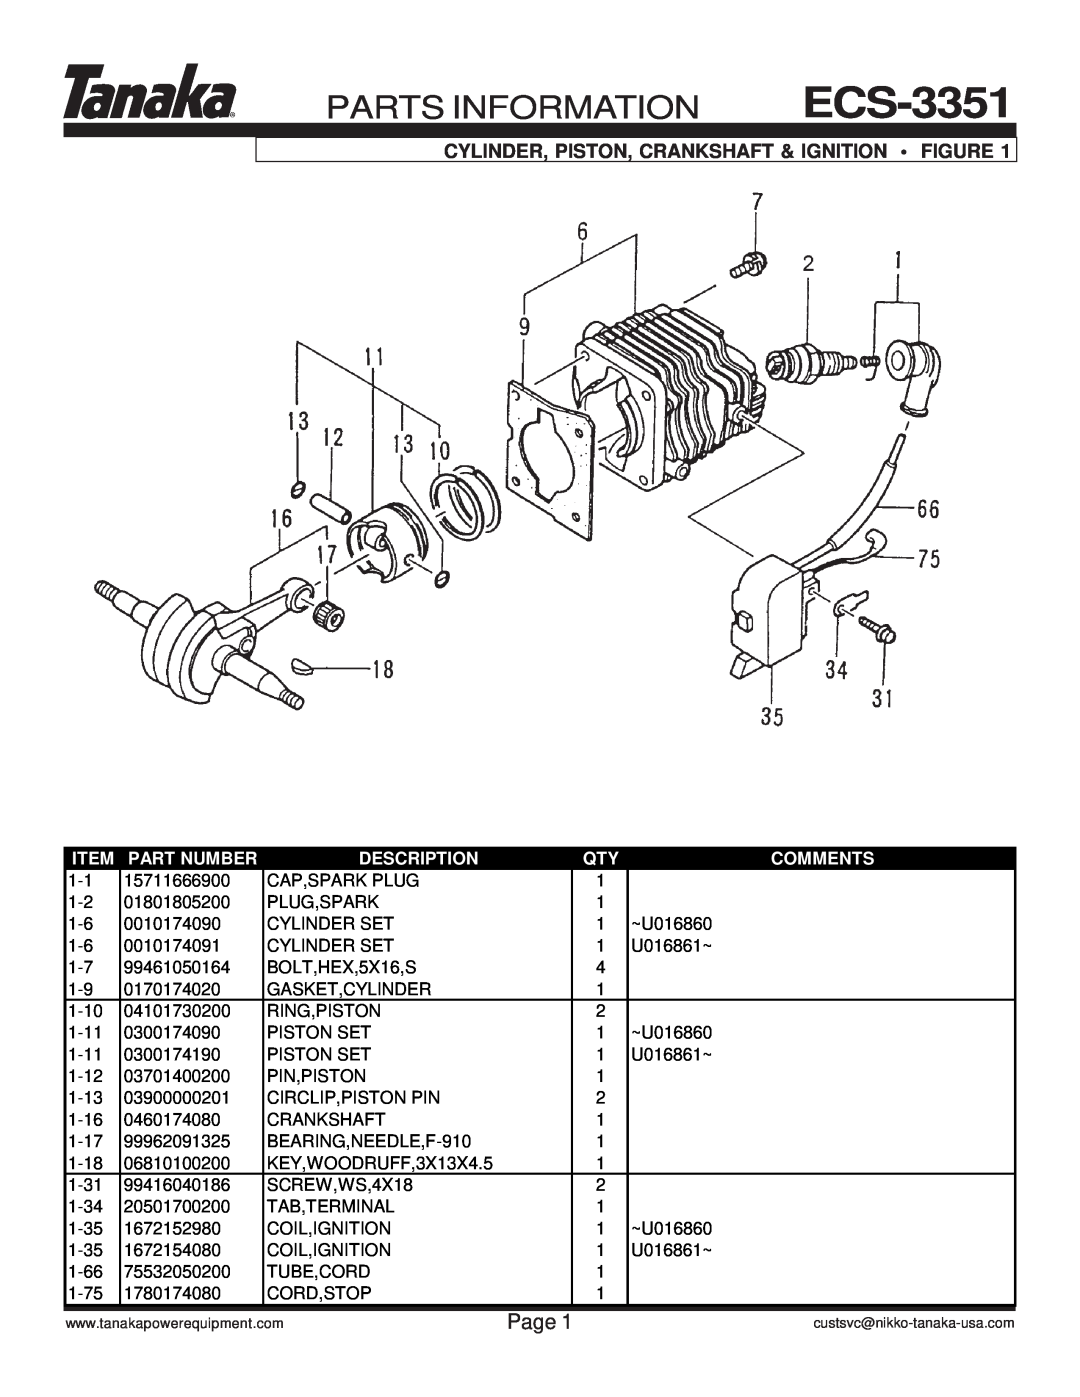 Tanaka ECS-3351/B manual Parts Information, Cylinder, Piston, Crankshaft & Ignition Figure, Page, Part Number, Description 